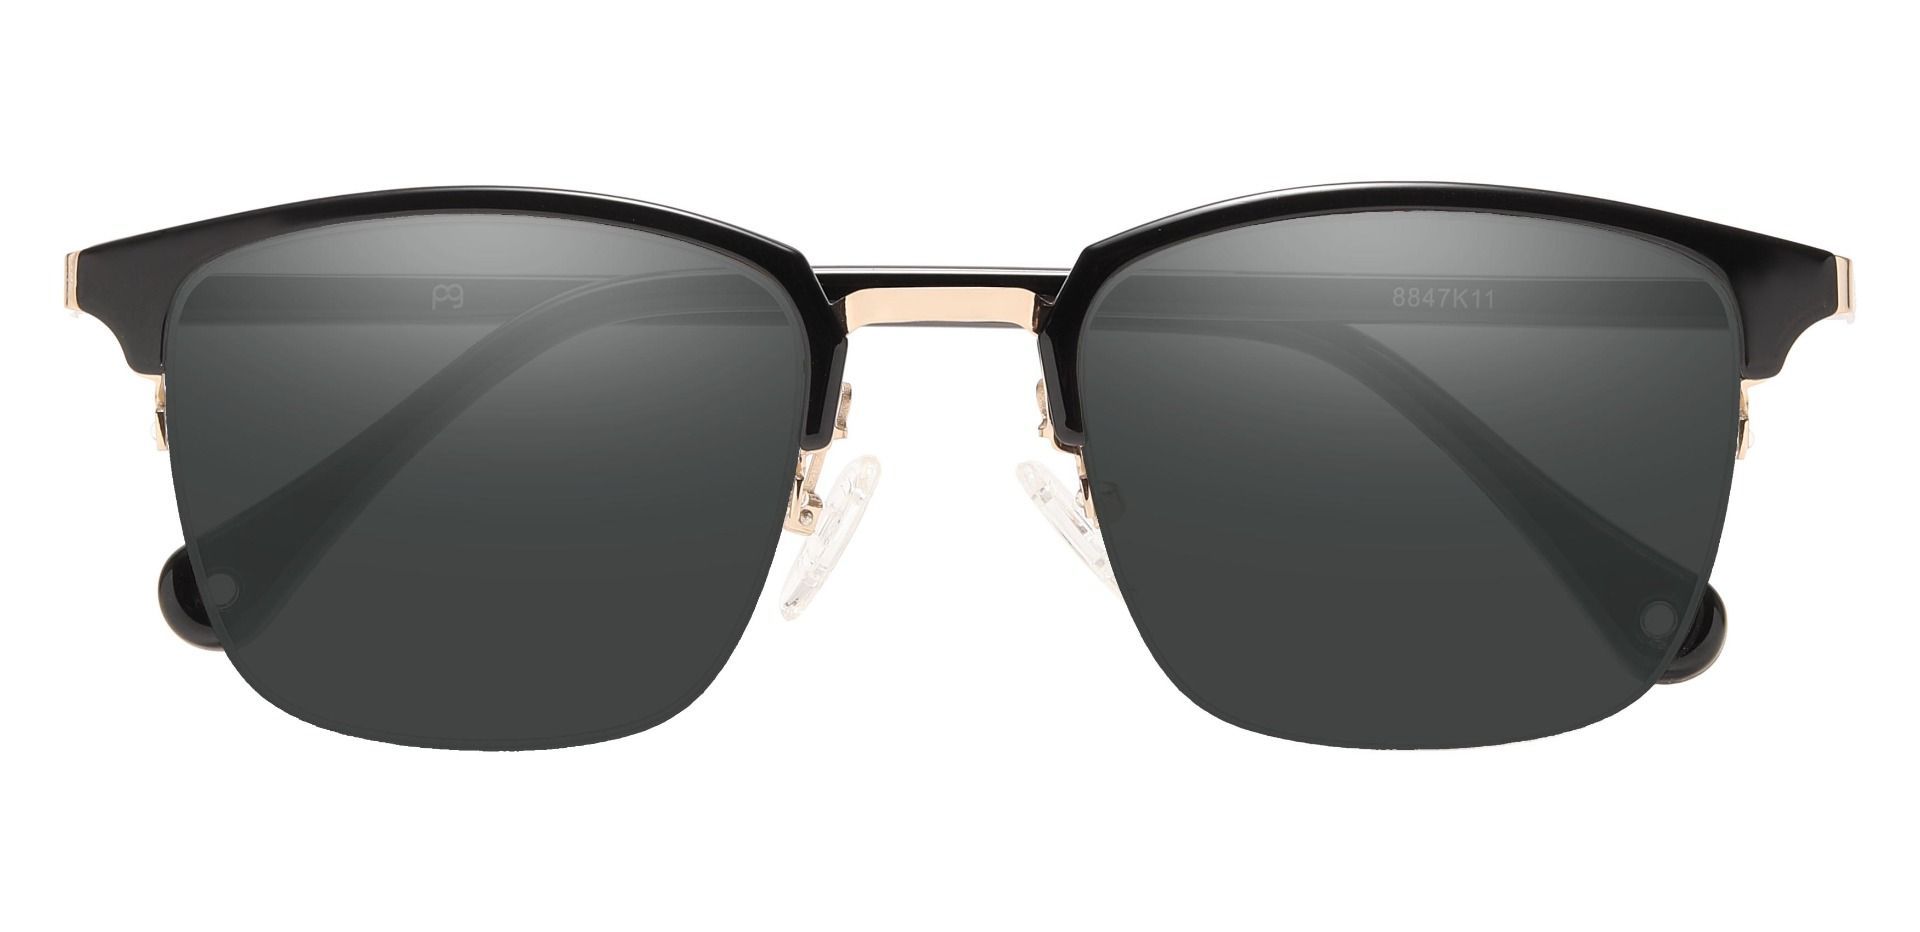 Atlantic Browline Non-Rx Sunglasses - Black Frame With Gray Lenses